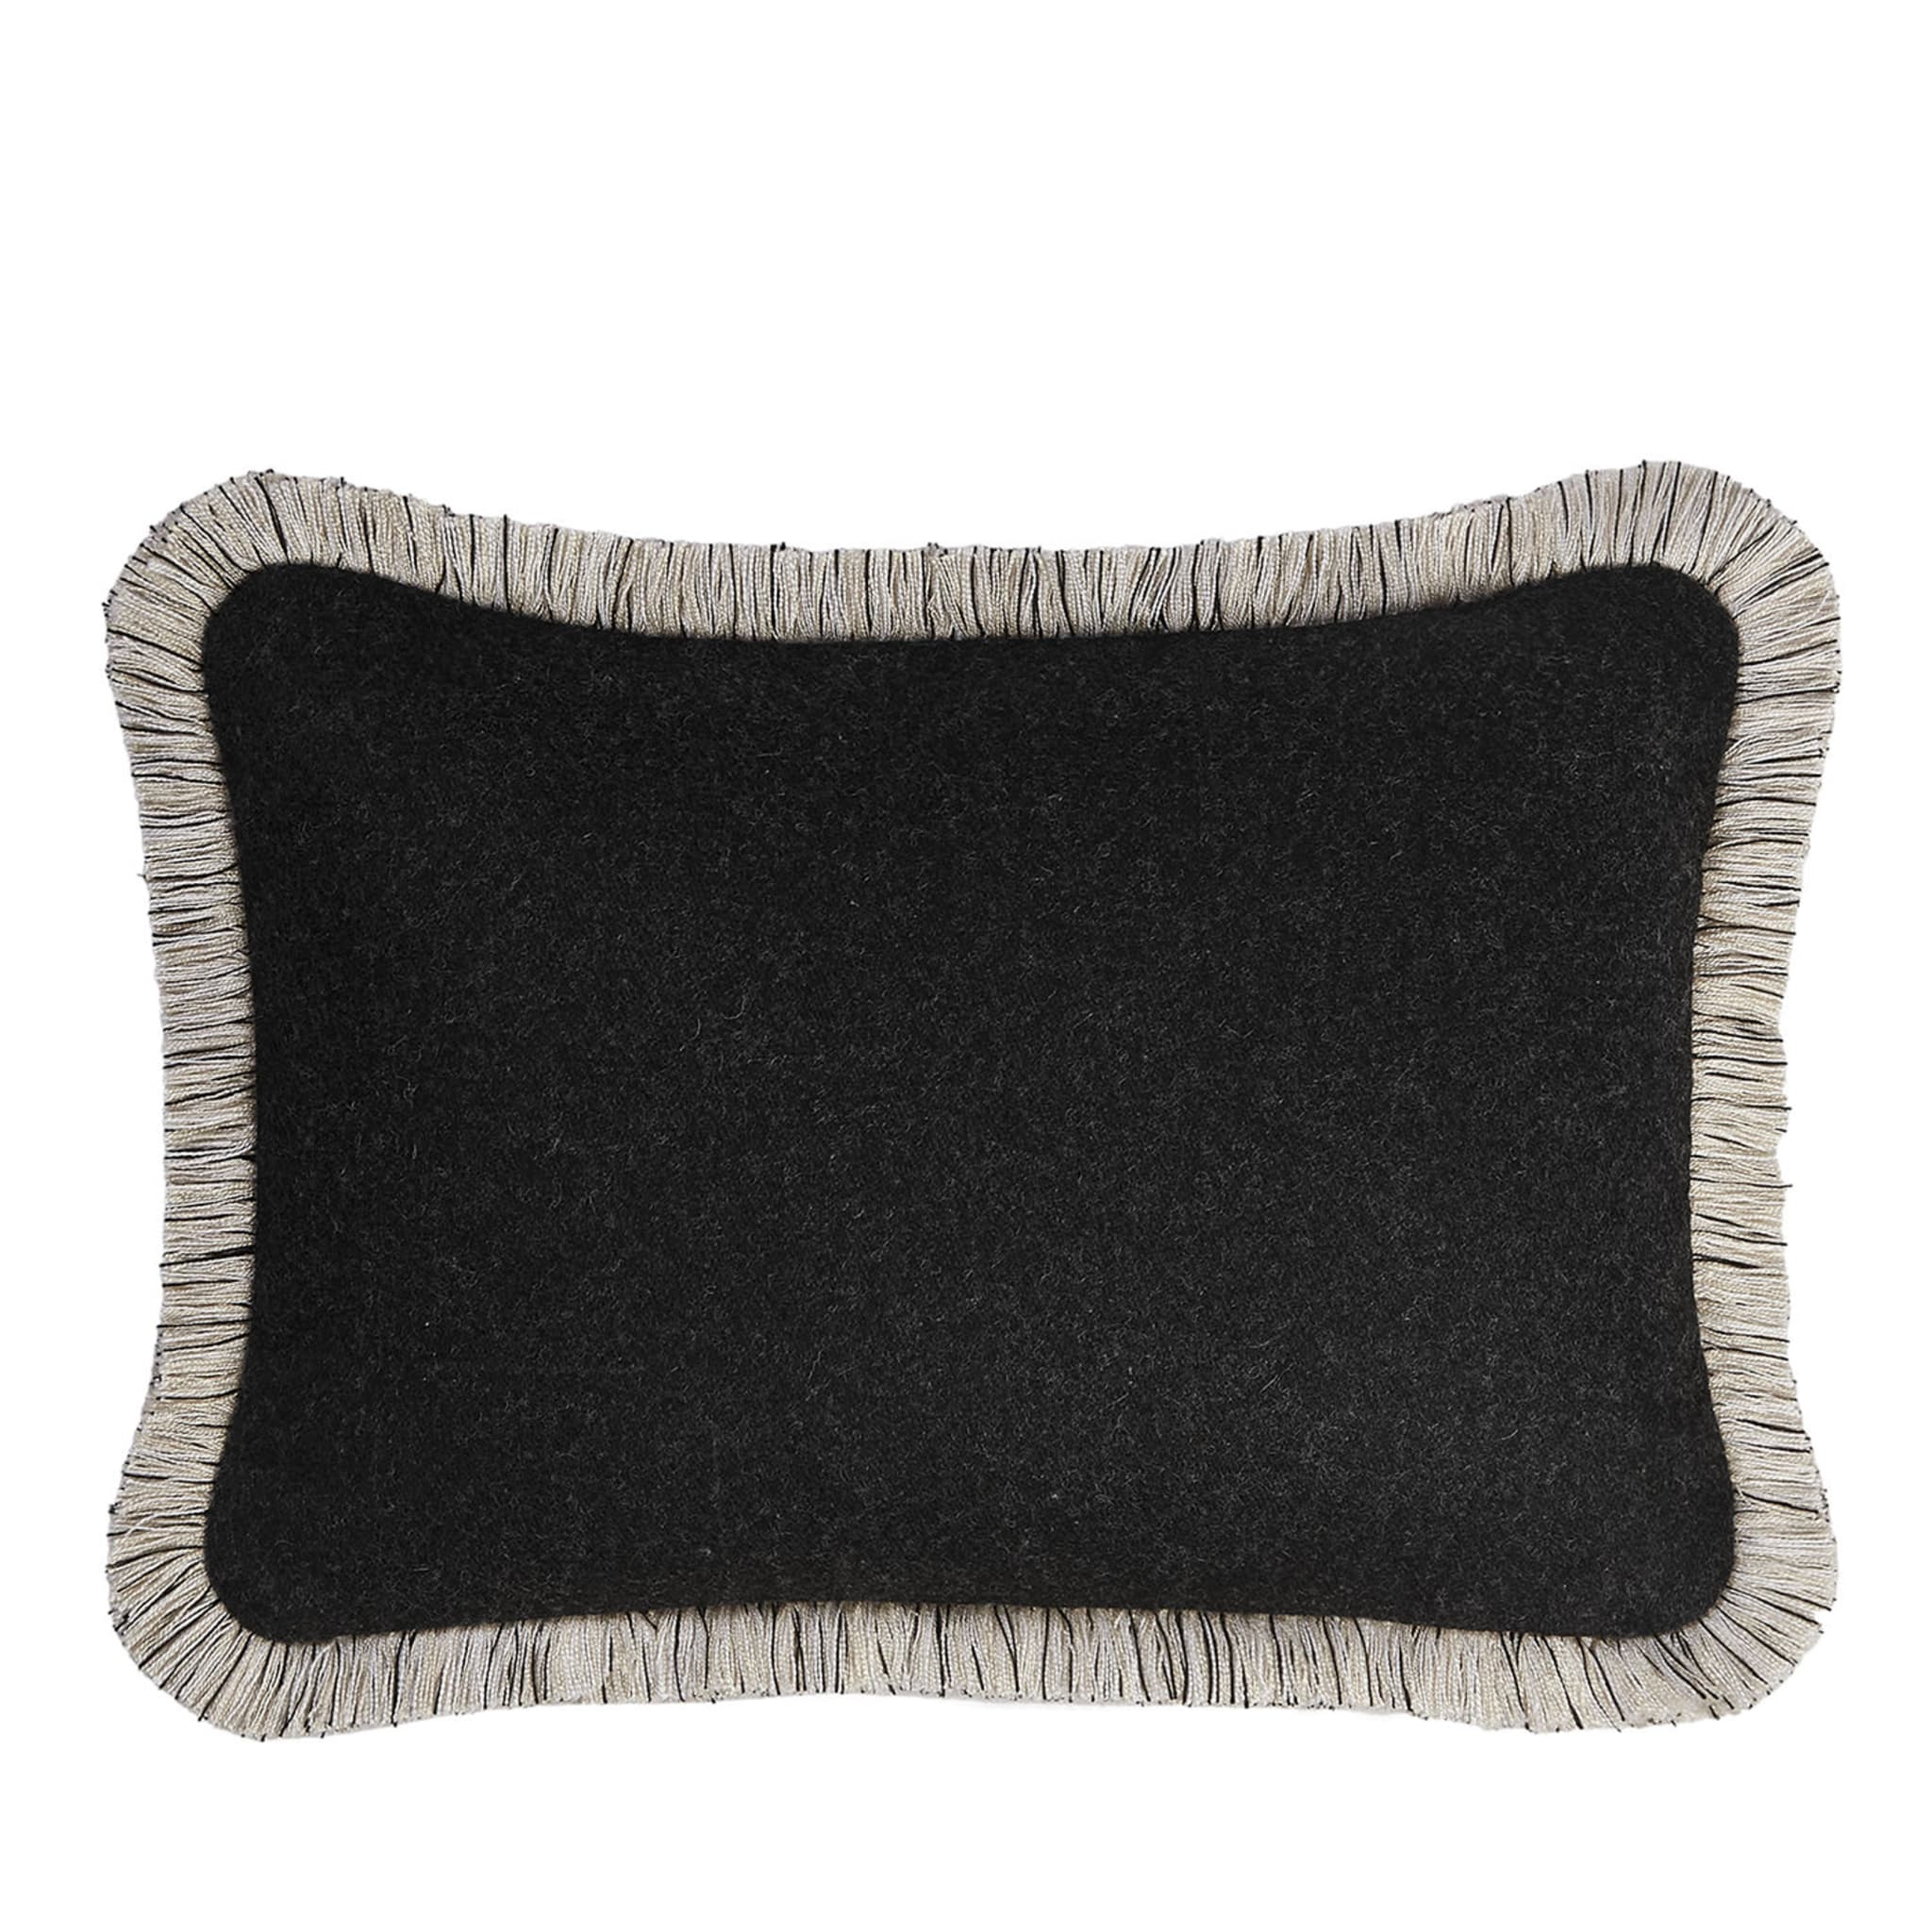 Artic Black Rectangular Cushion Limited Edition  - Main view